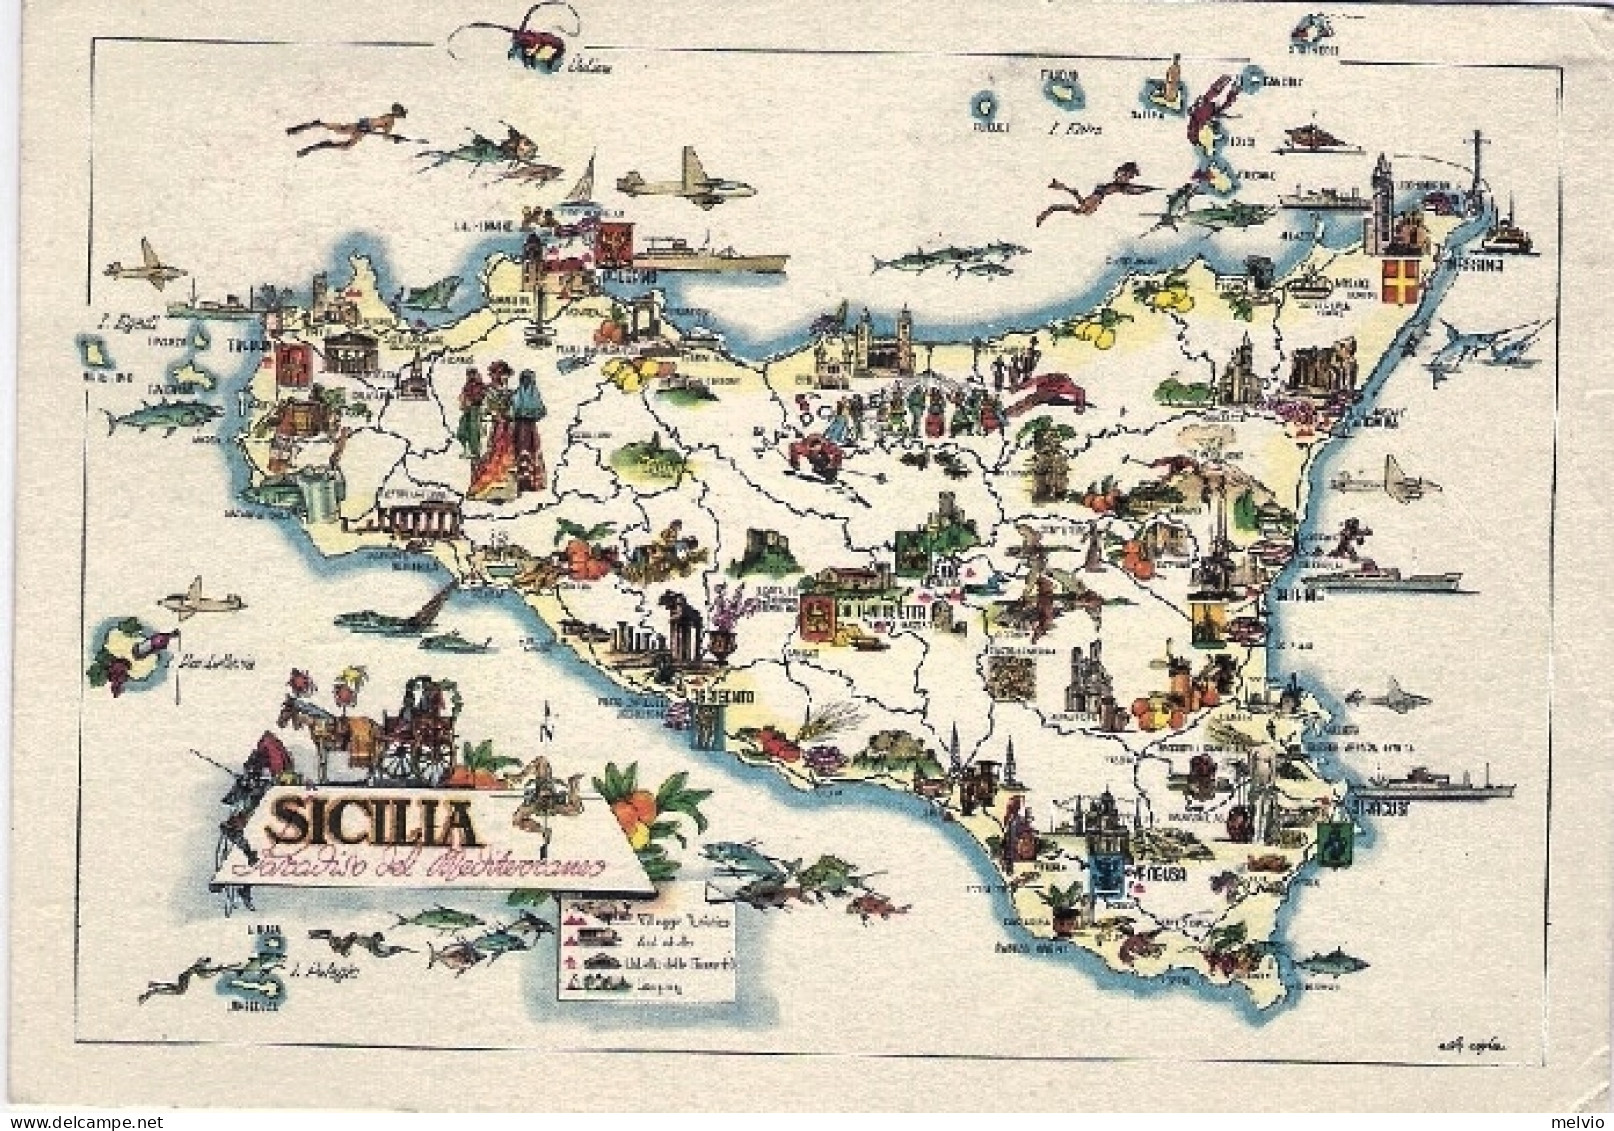 1959-cartolina Sicilia Paradiso Del Mediterraneo Affrancata L.15 Byron Isolato - Cartes Géographiques